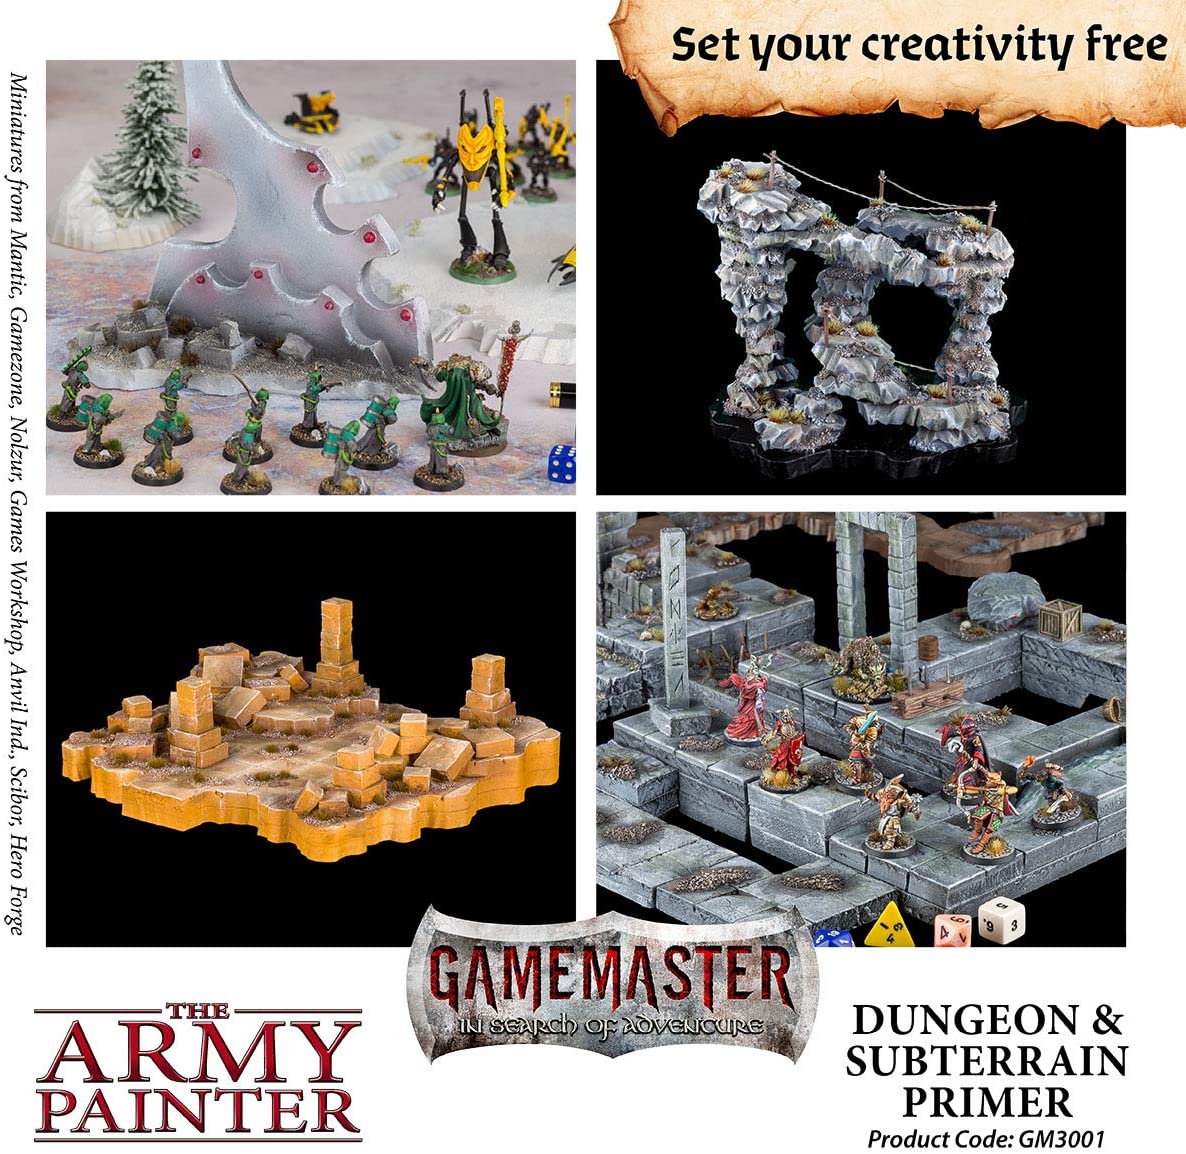 The Army Painter - Gamemaster: Dungeon & Subterrain Primer